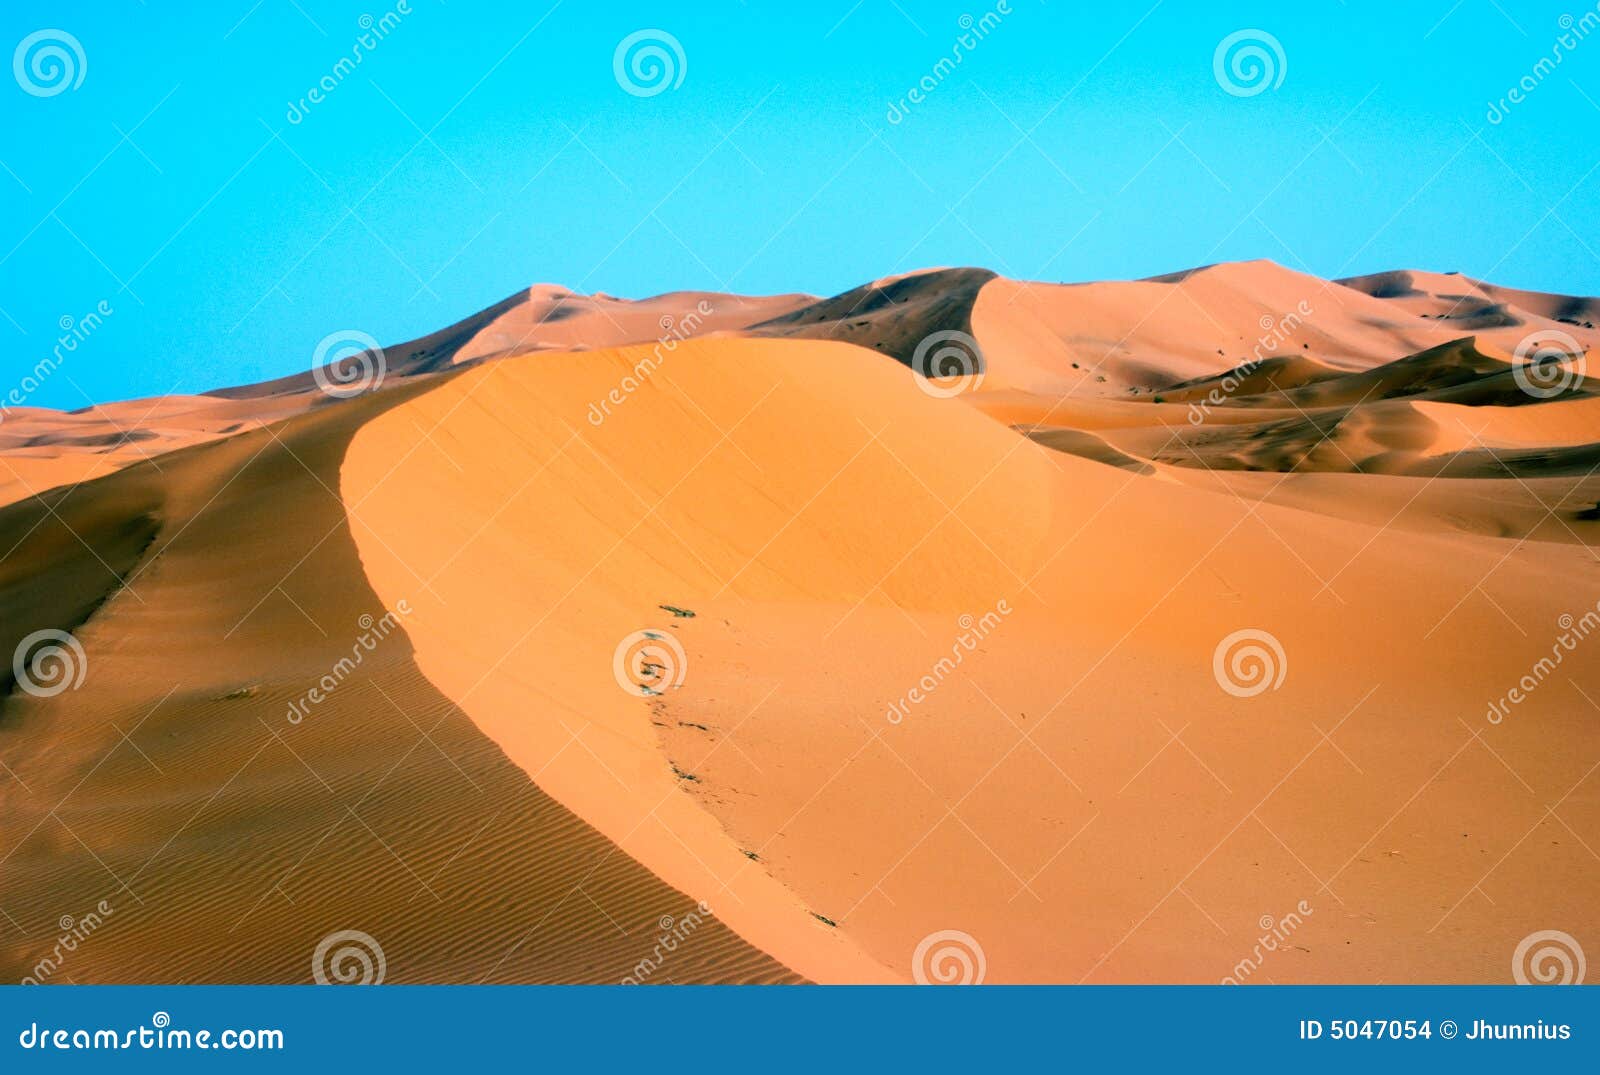 sand dune at erg chebbi in morocco